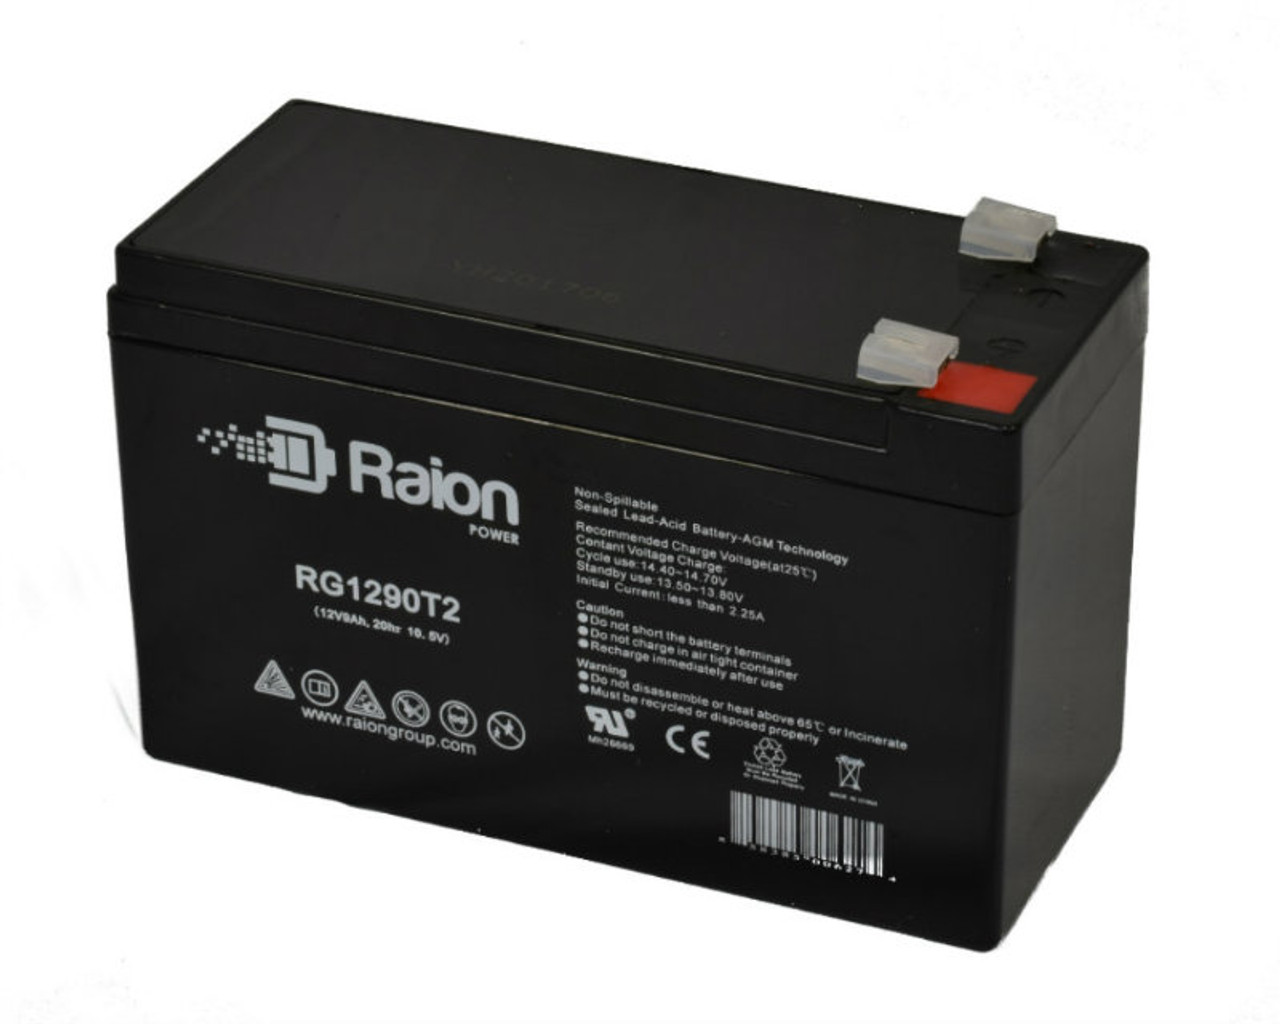 Raion Power RG1290T2 12V 9Ah AGM Battery for Valen Topin 12 TP 9